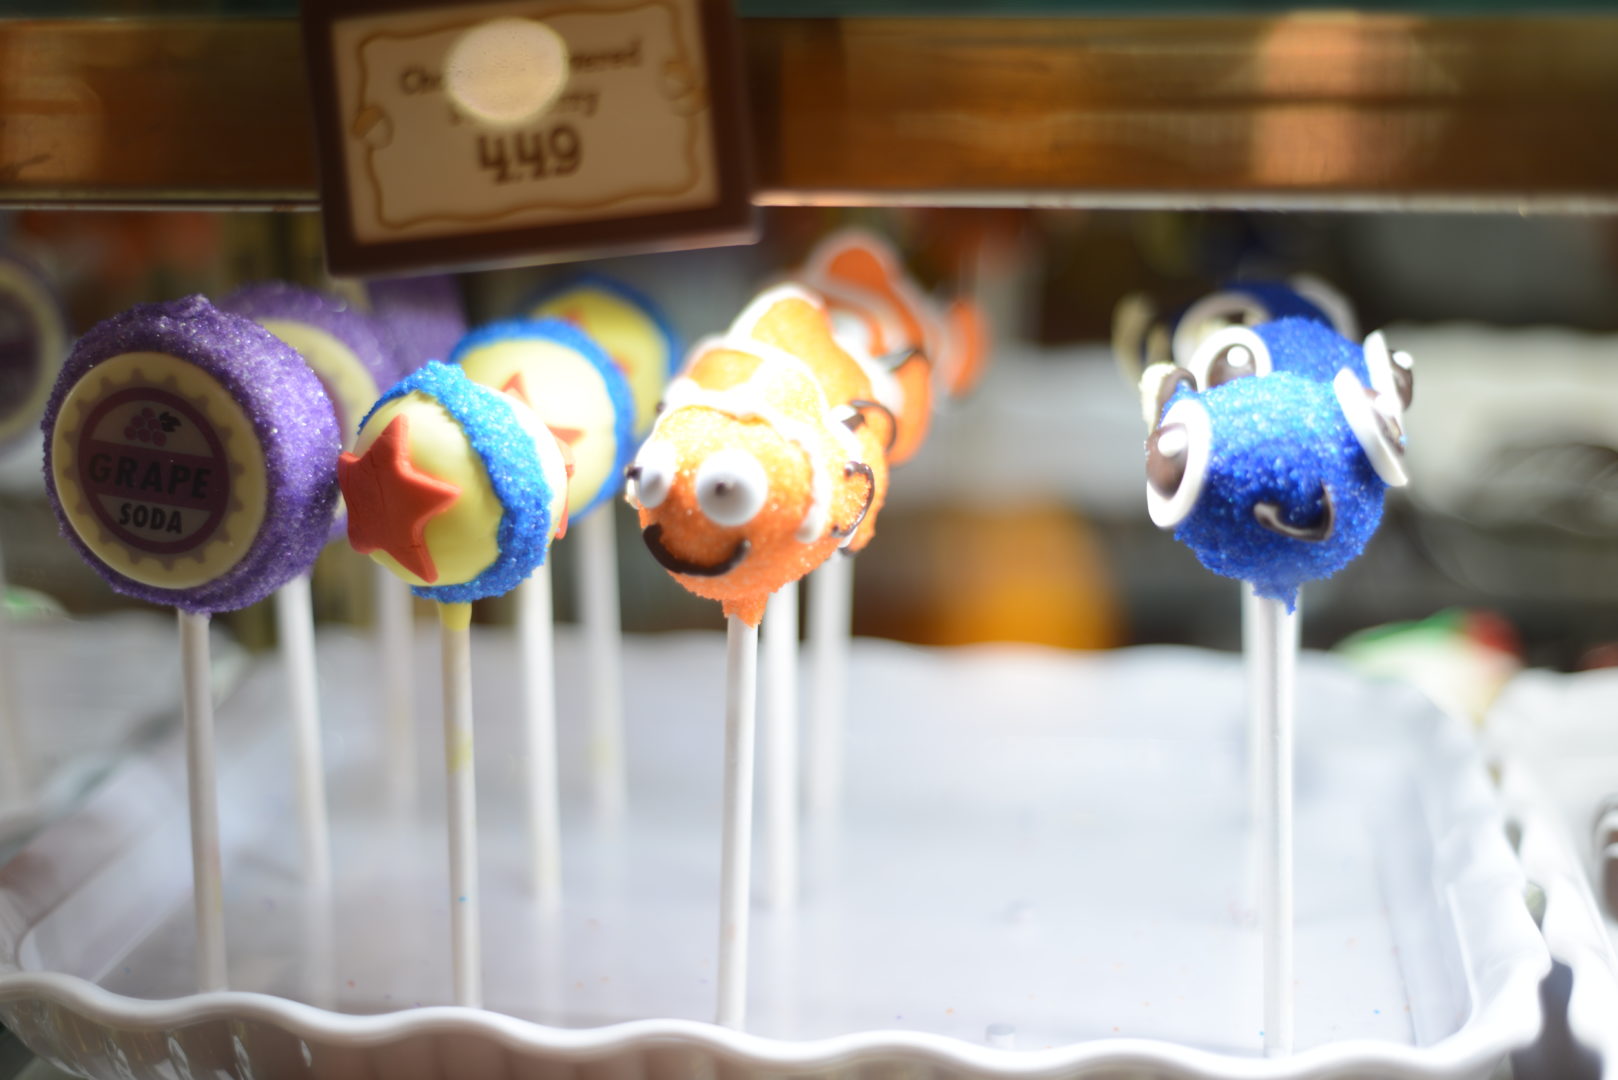 Finding Nemo and Luxo Pixar Cake Pops in a Display Case at Disneyland's Pixar Fest